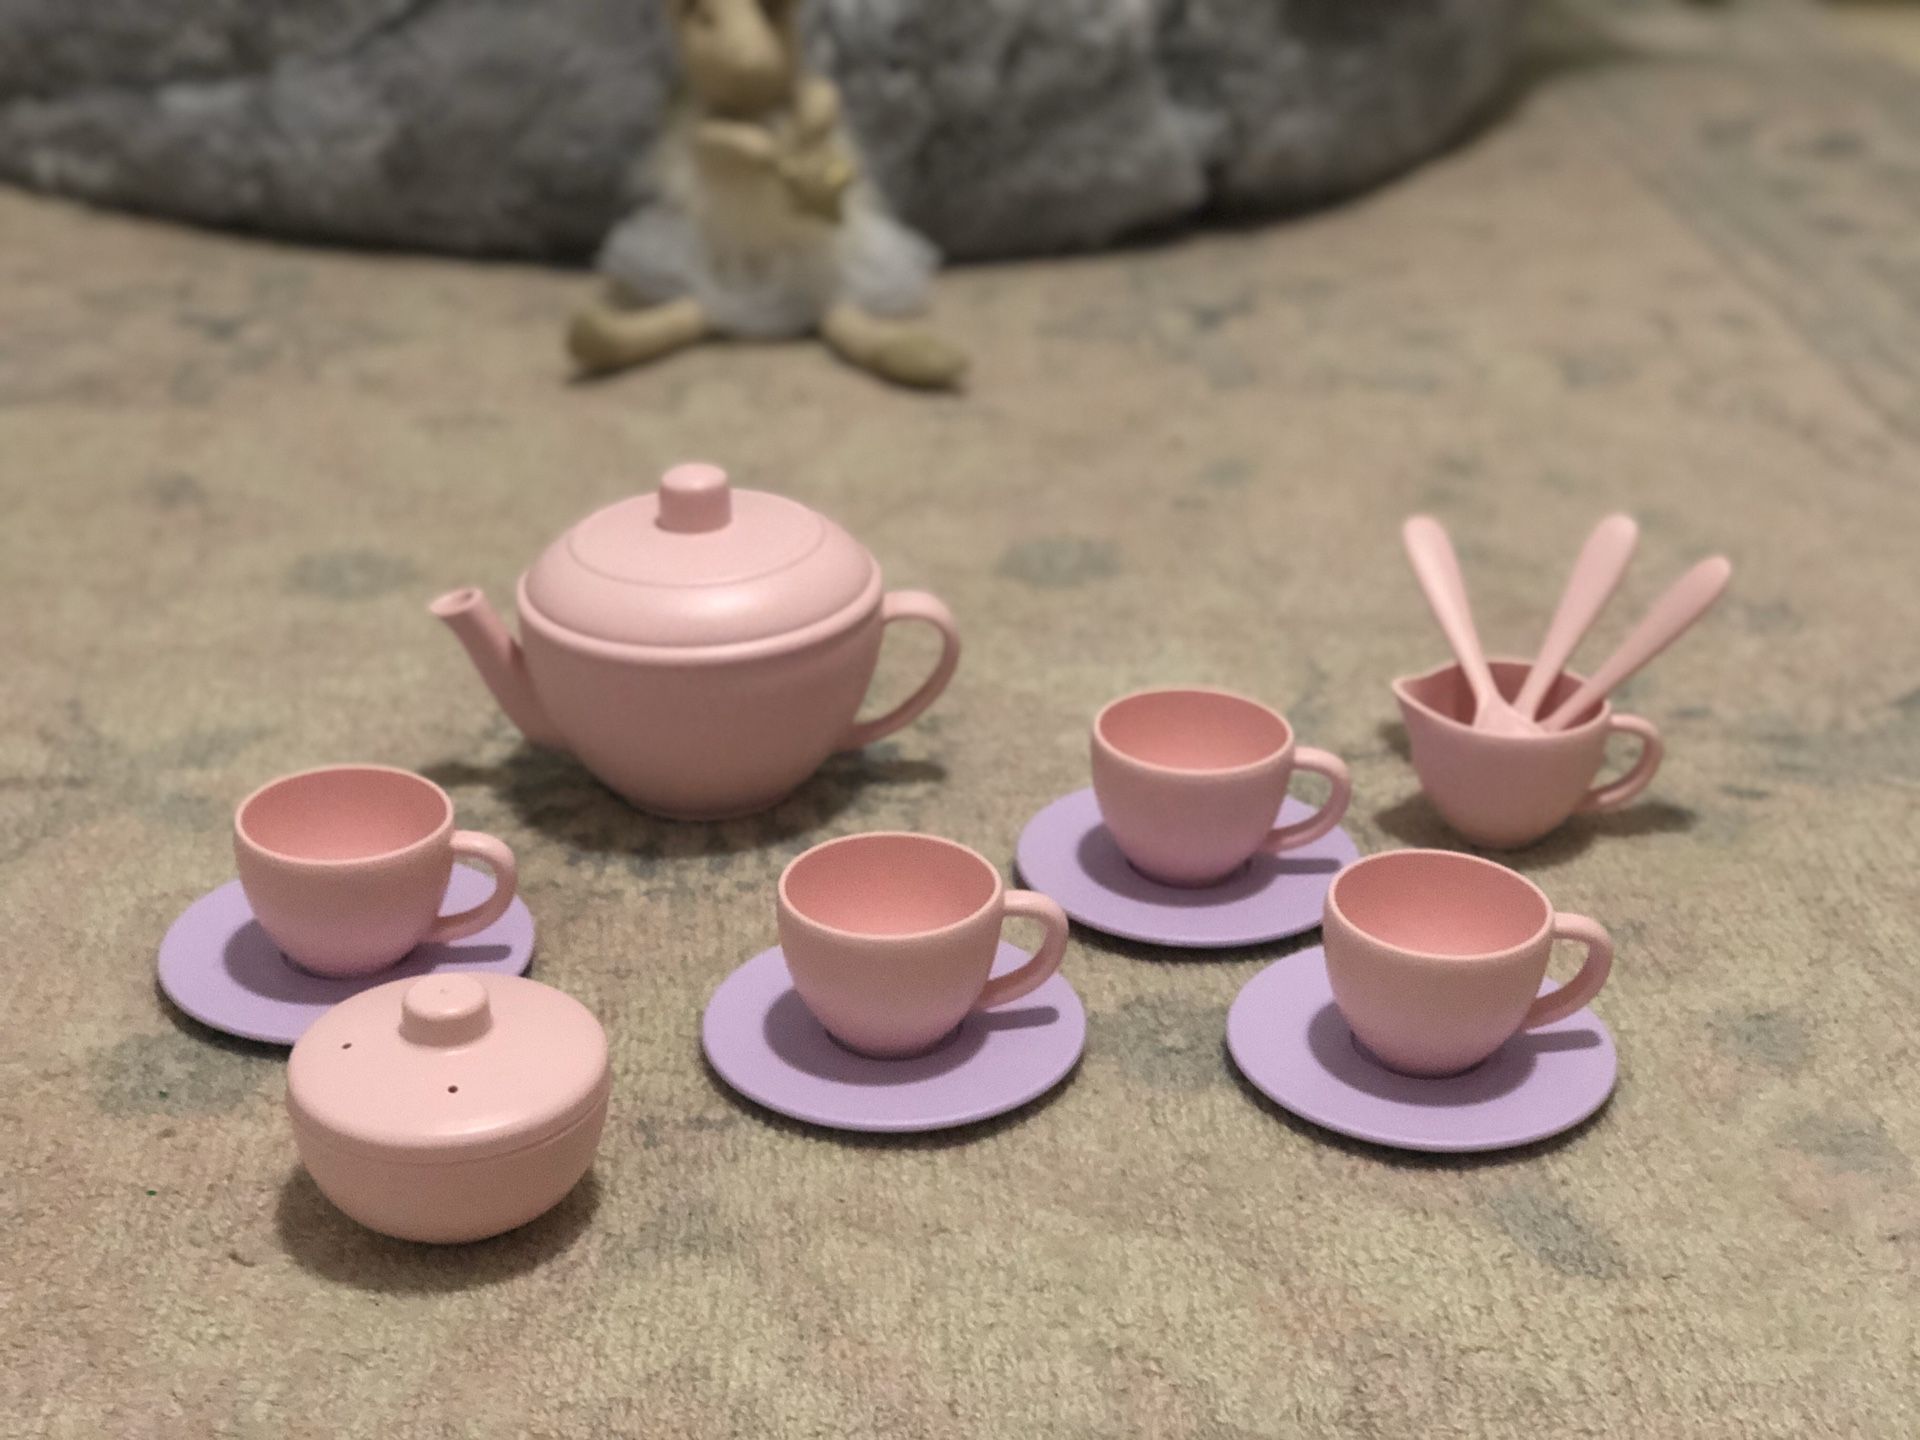 Tea set toy - Pottery Barn Kids